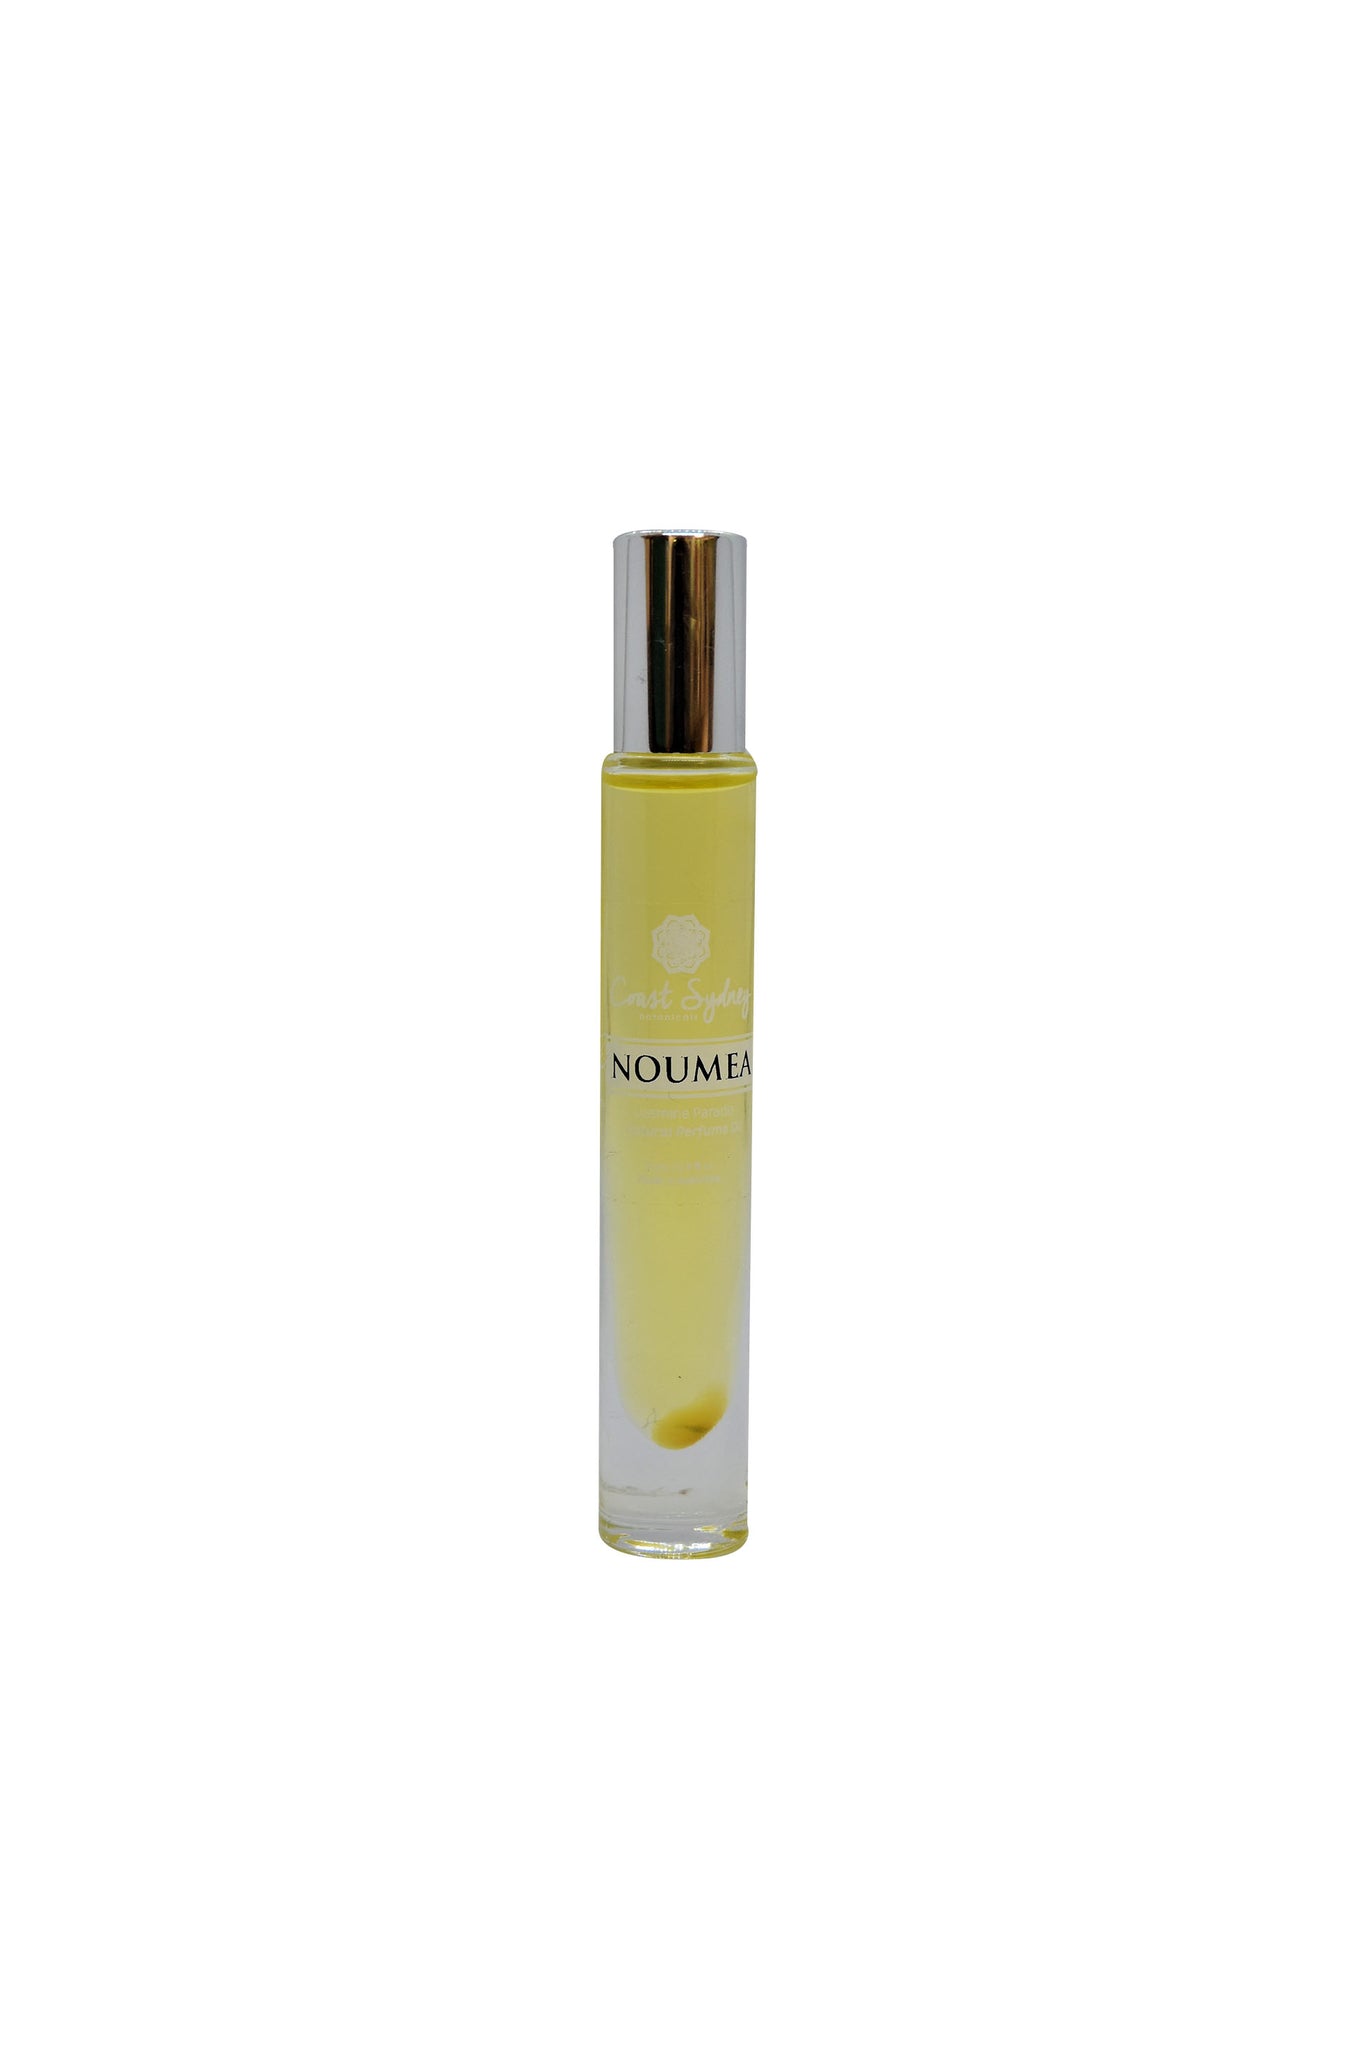 NOUMEA Jasmine Paradis Natural Perfume